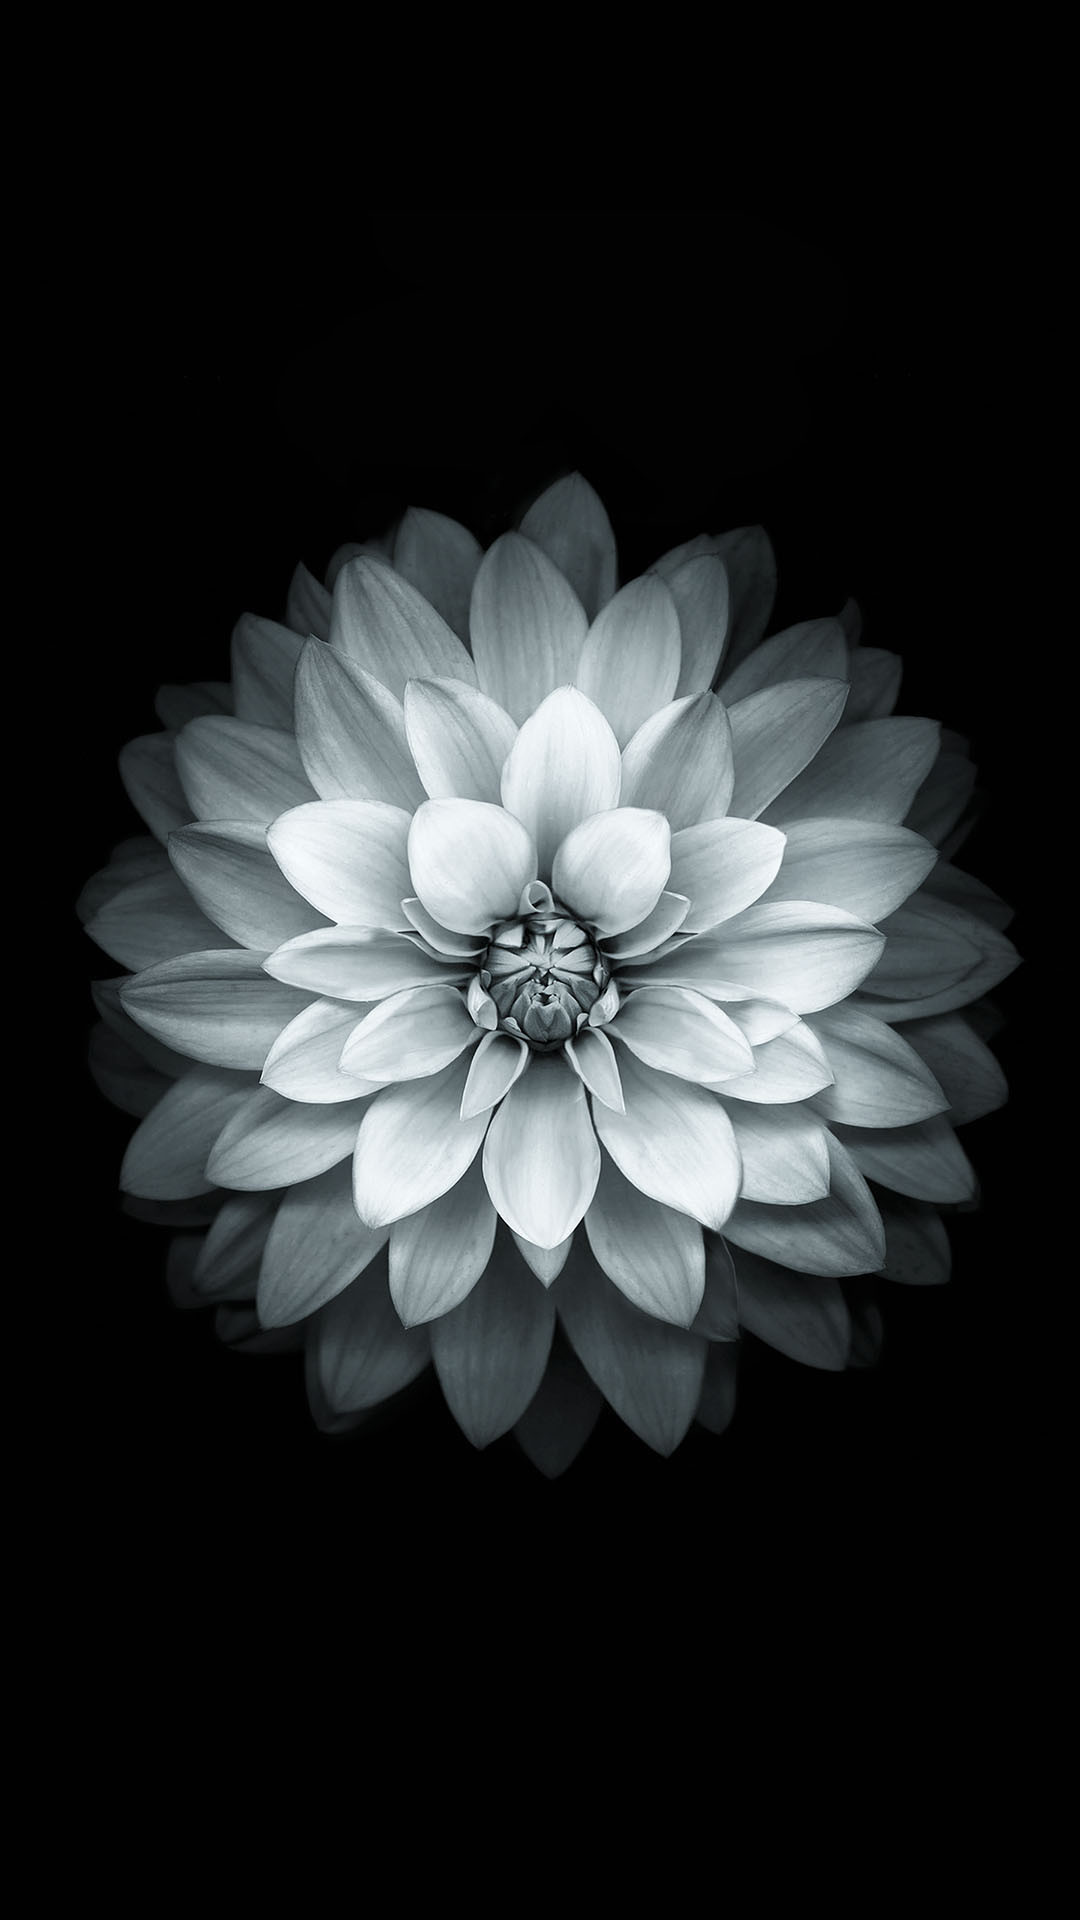 1080x1920 Black White Apple Lotus Flower Android Wallpaper download 